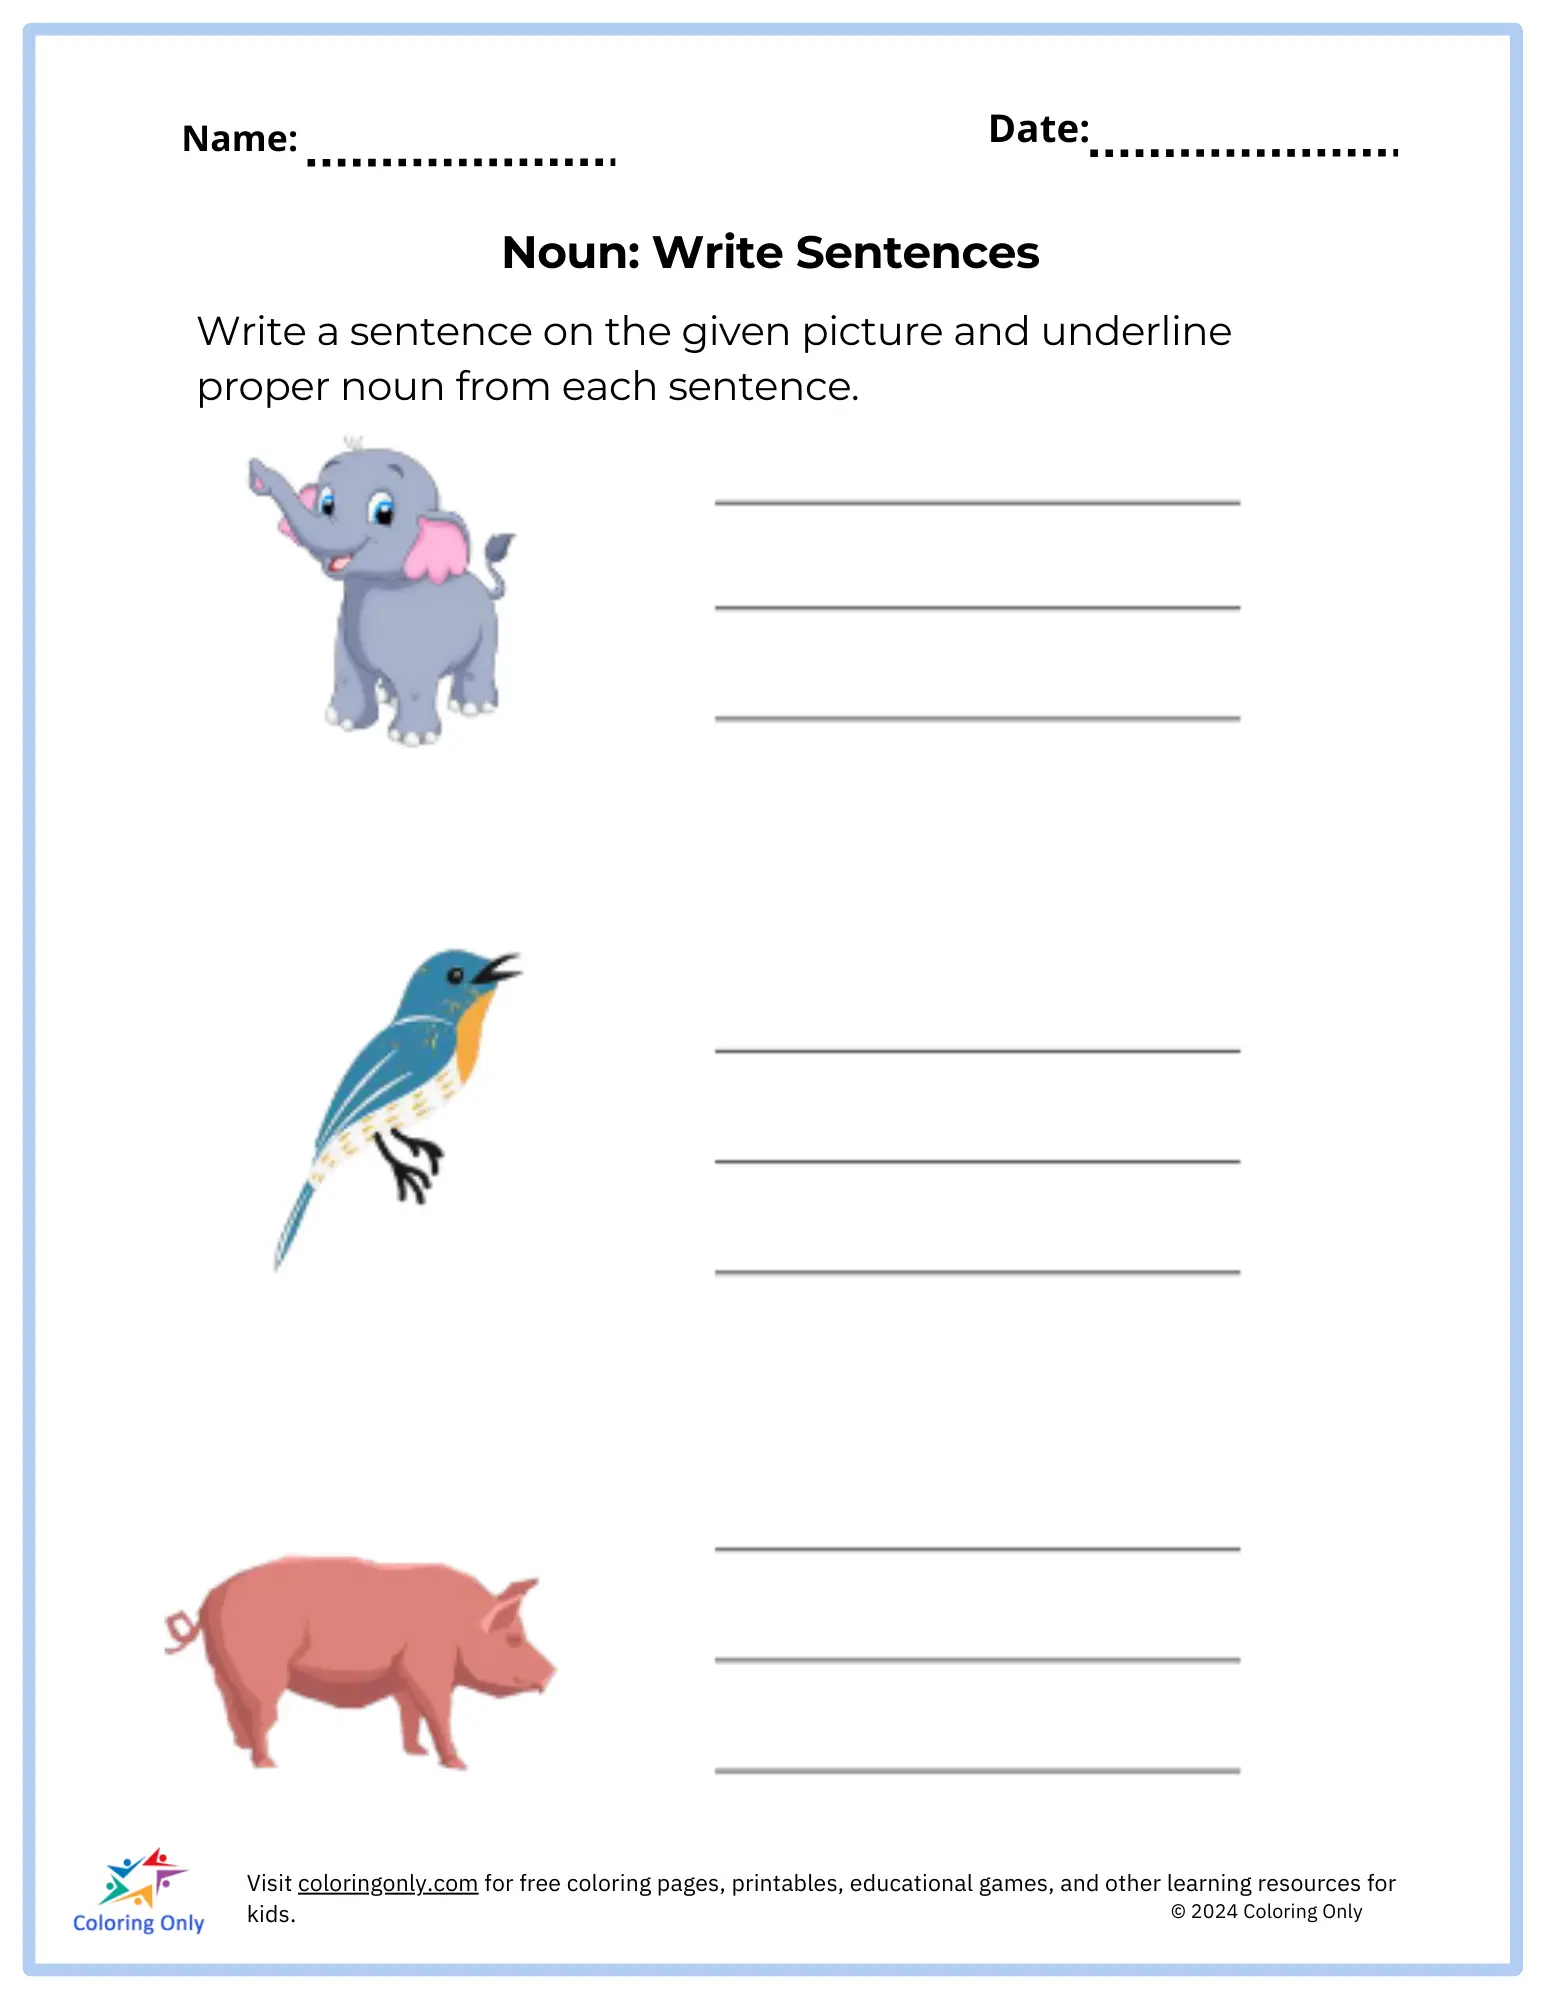 Noun: Write Sentences Free Printable Worksheet